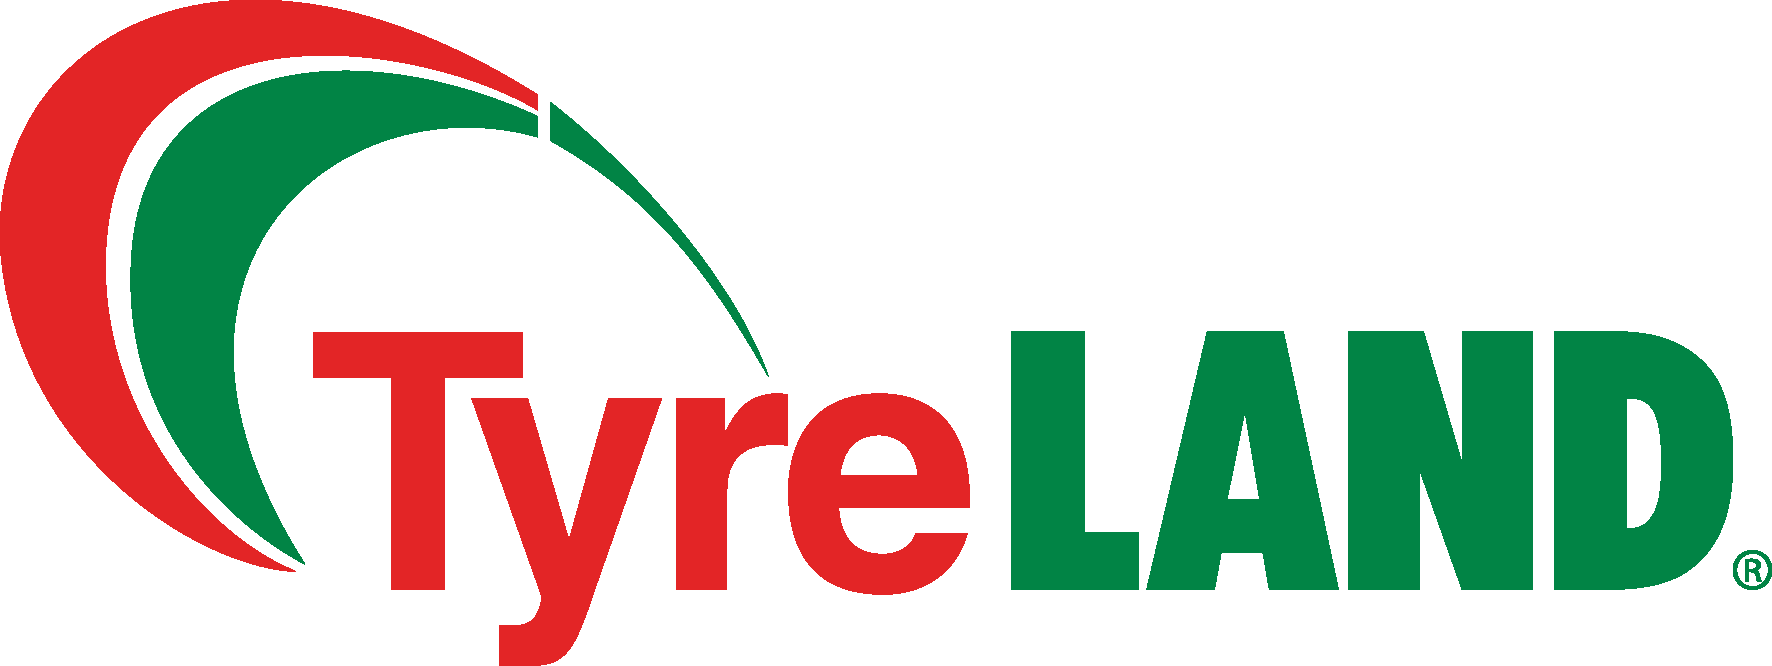 tyreland logo